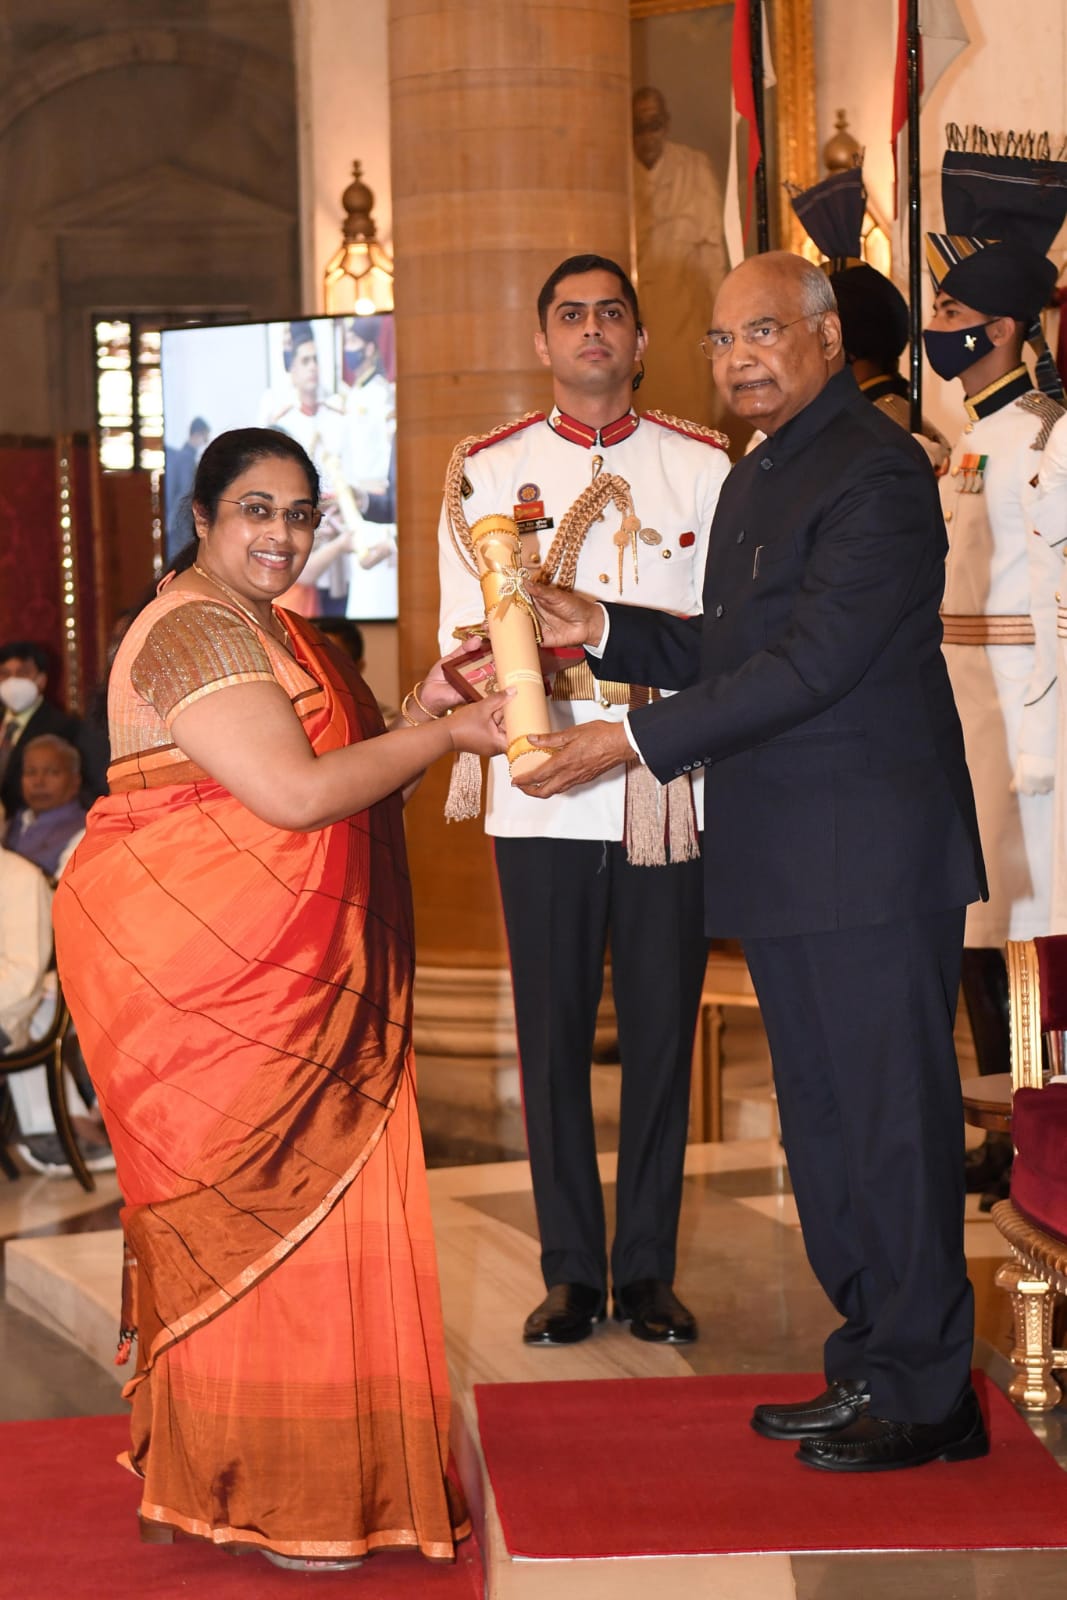 Padma Awards Investiture Ceremony held at New Delhi